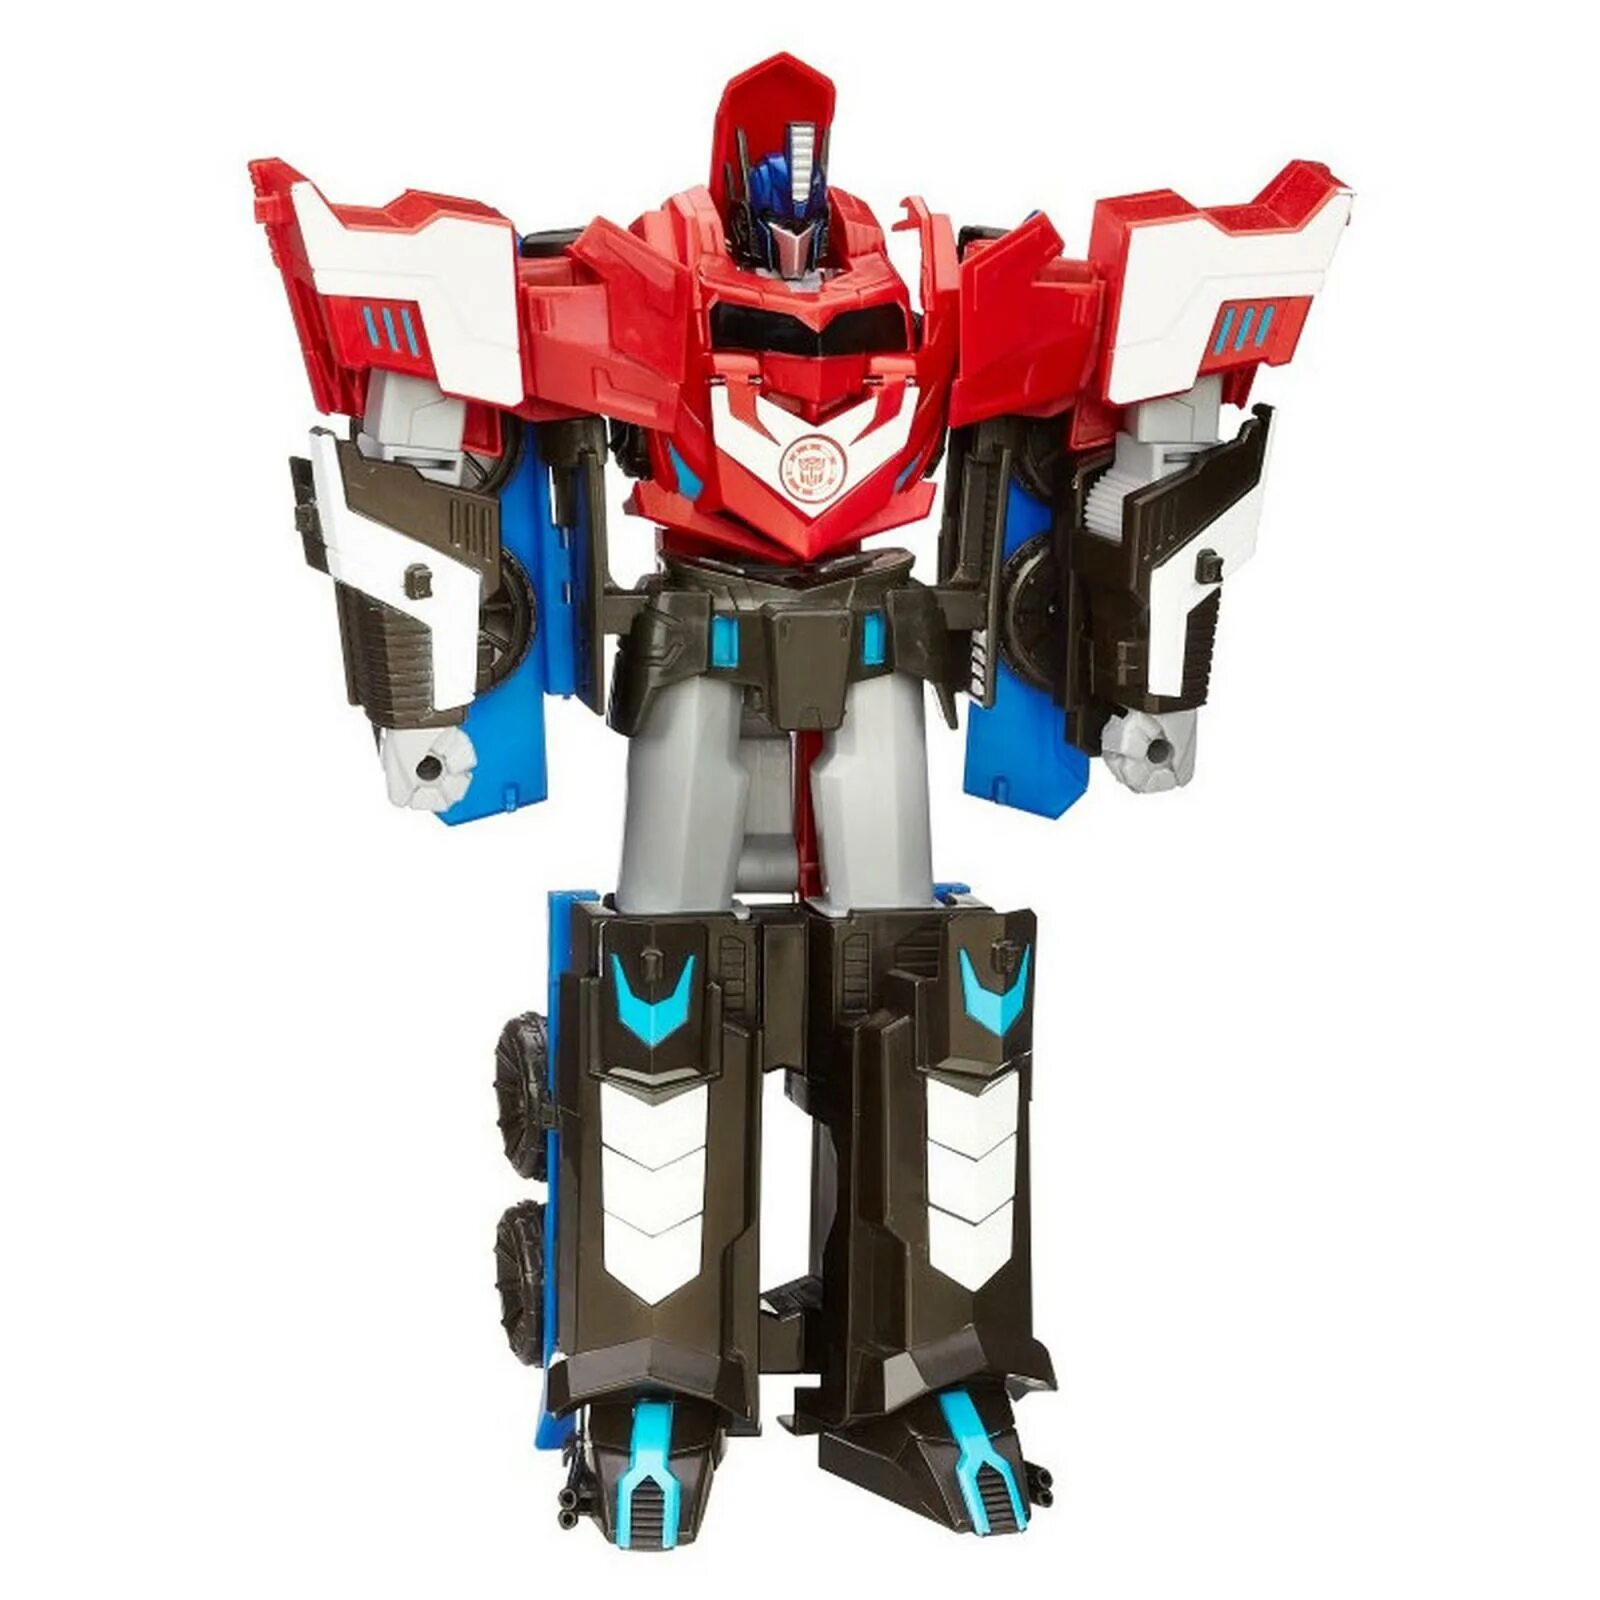 Робот оптимус. Трансформер Хасбро Оптимус Прайм. Робот Hasbro Transformers Оптимус Прайм. Мега Оптимус Прайм игрушка. Трансформеры Robots in Disguise Оптимус Прайм.